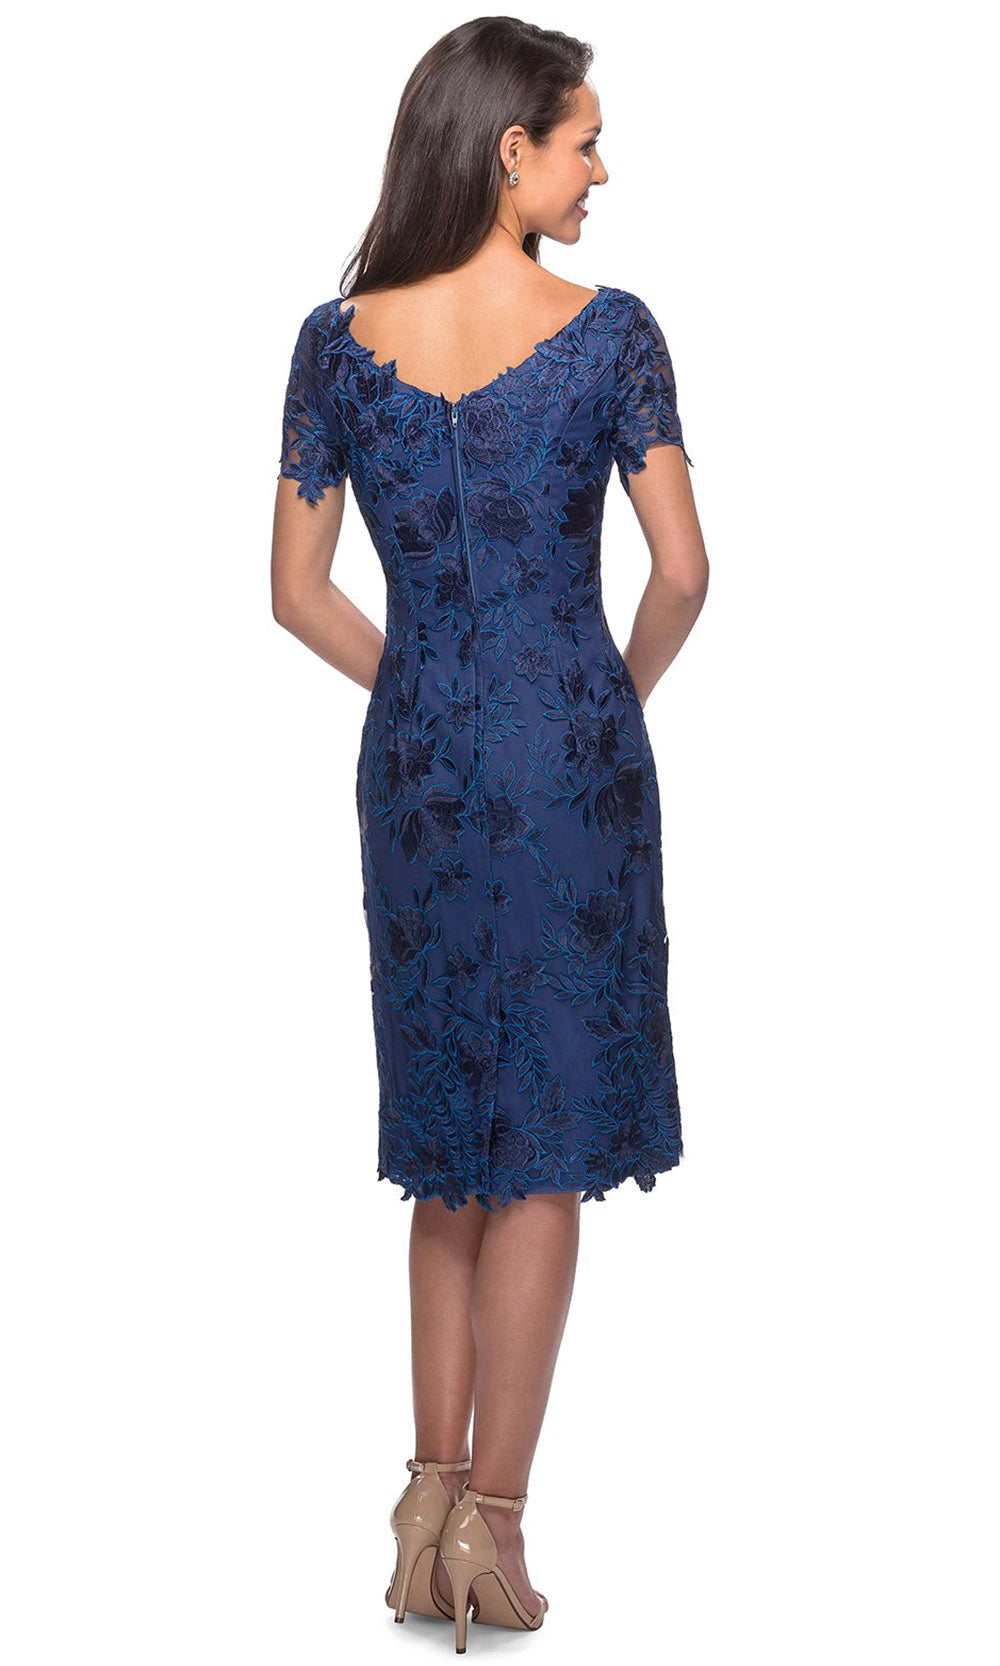 La Femme - 25522 Floral Appliqued Embroidery Sheath Dress In Blue